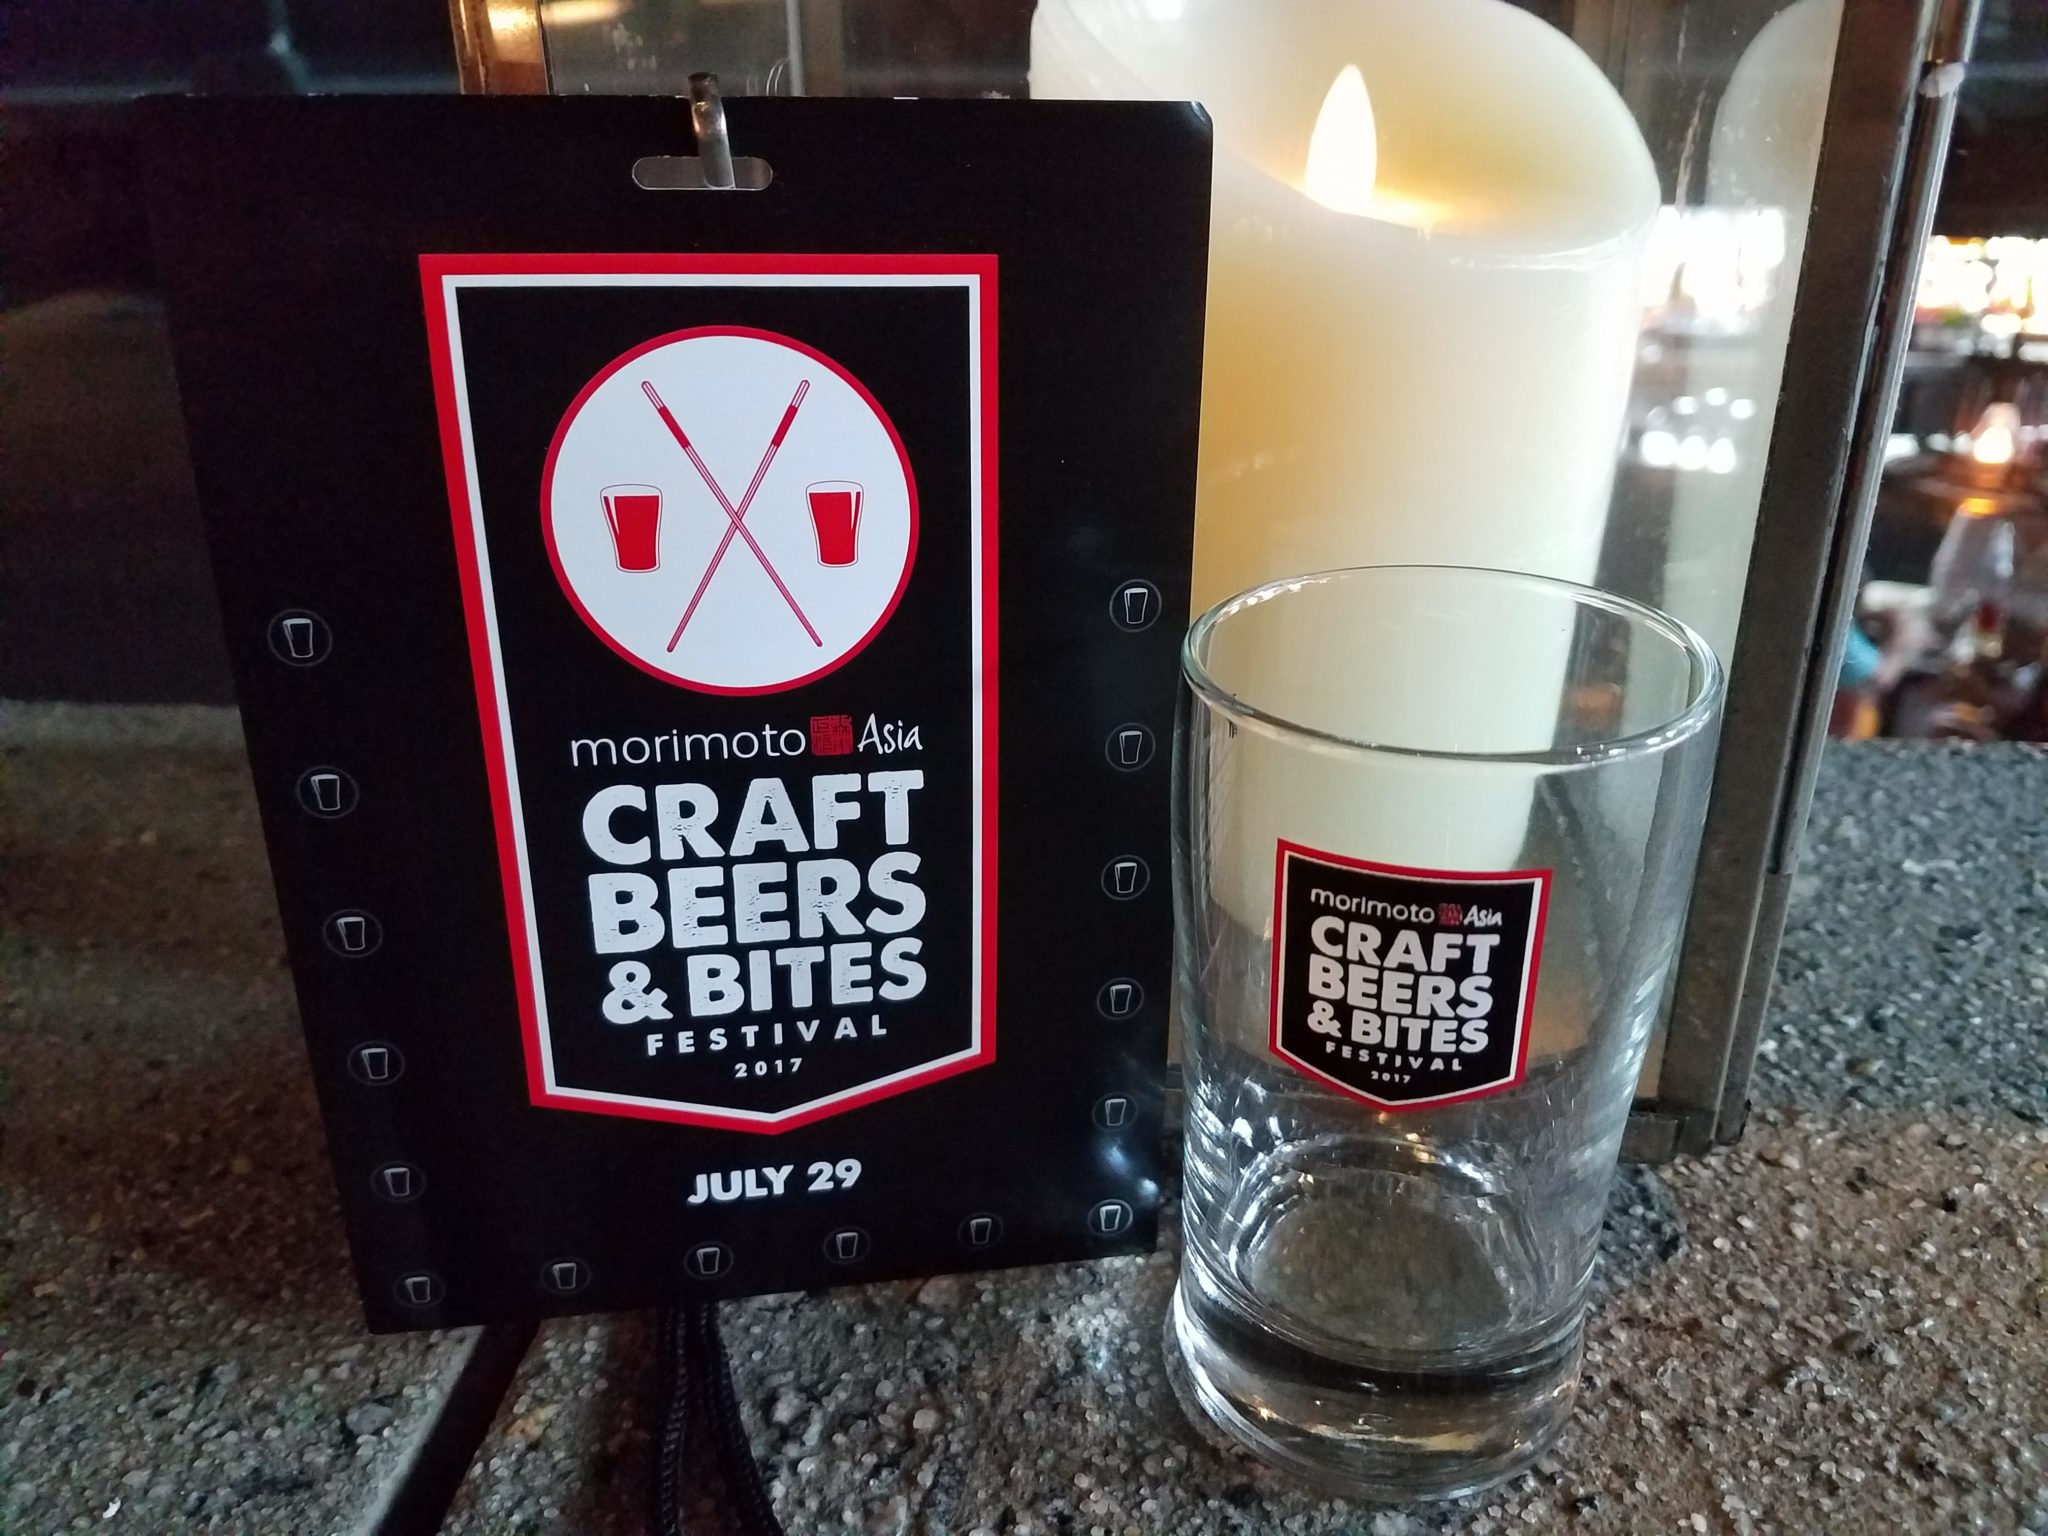 Morimoto Asia’s Craft Beers & Bites Event Review